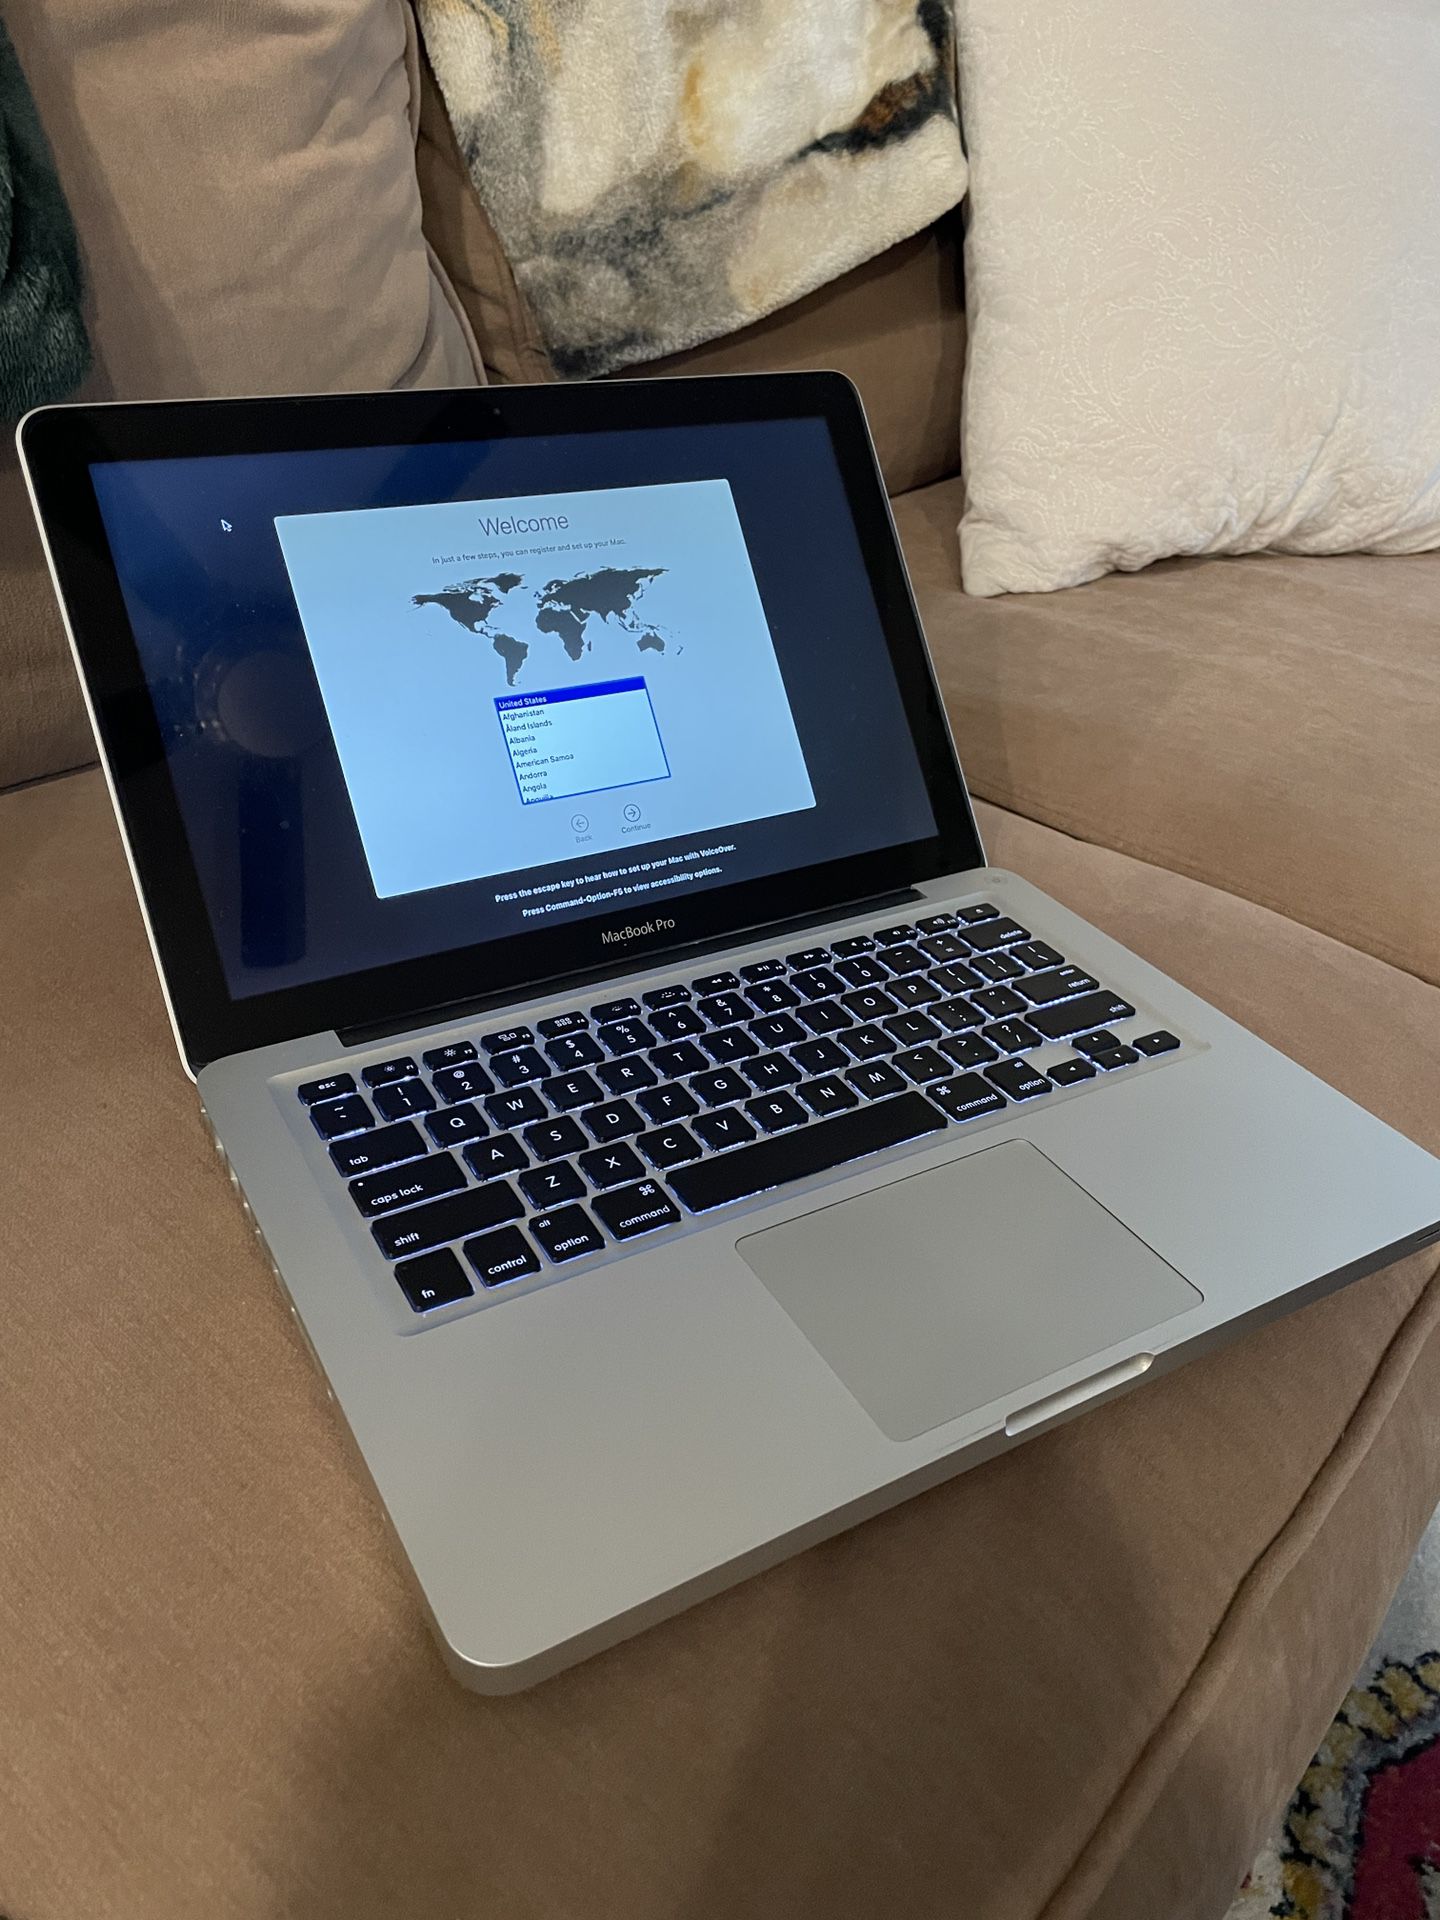 MacBook Pro (2 Terabytes)